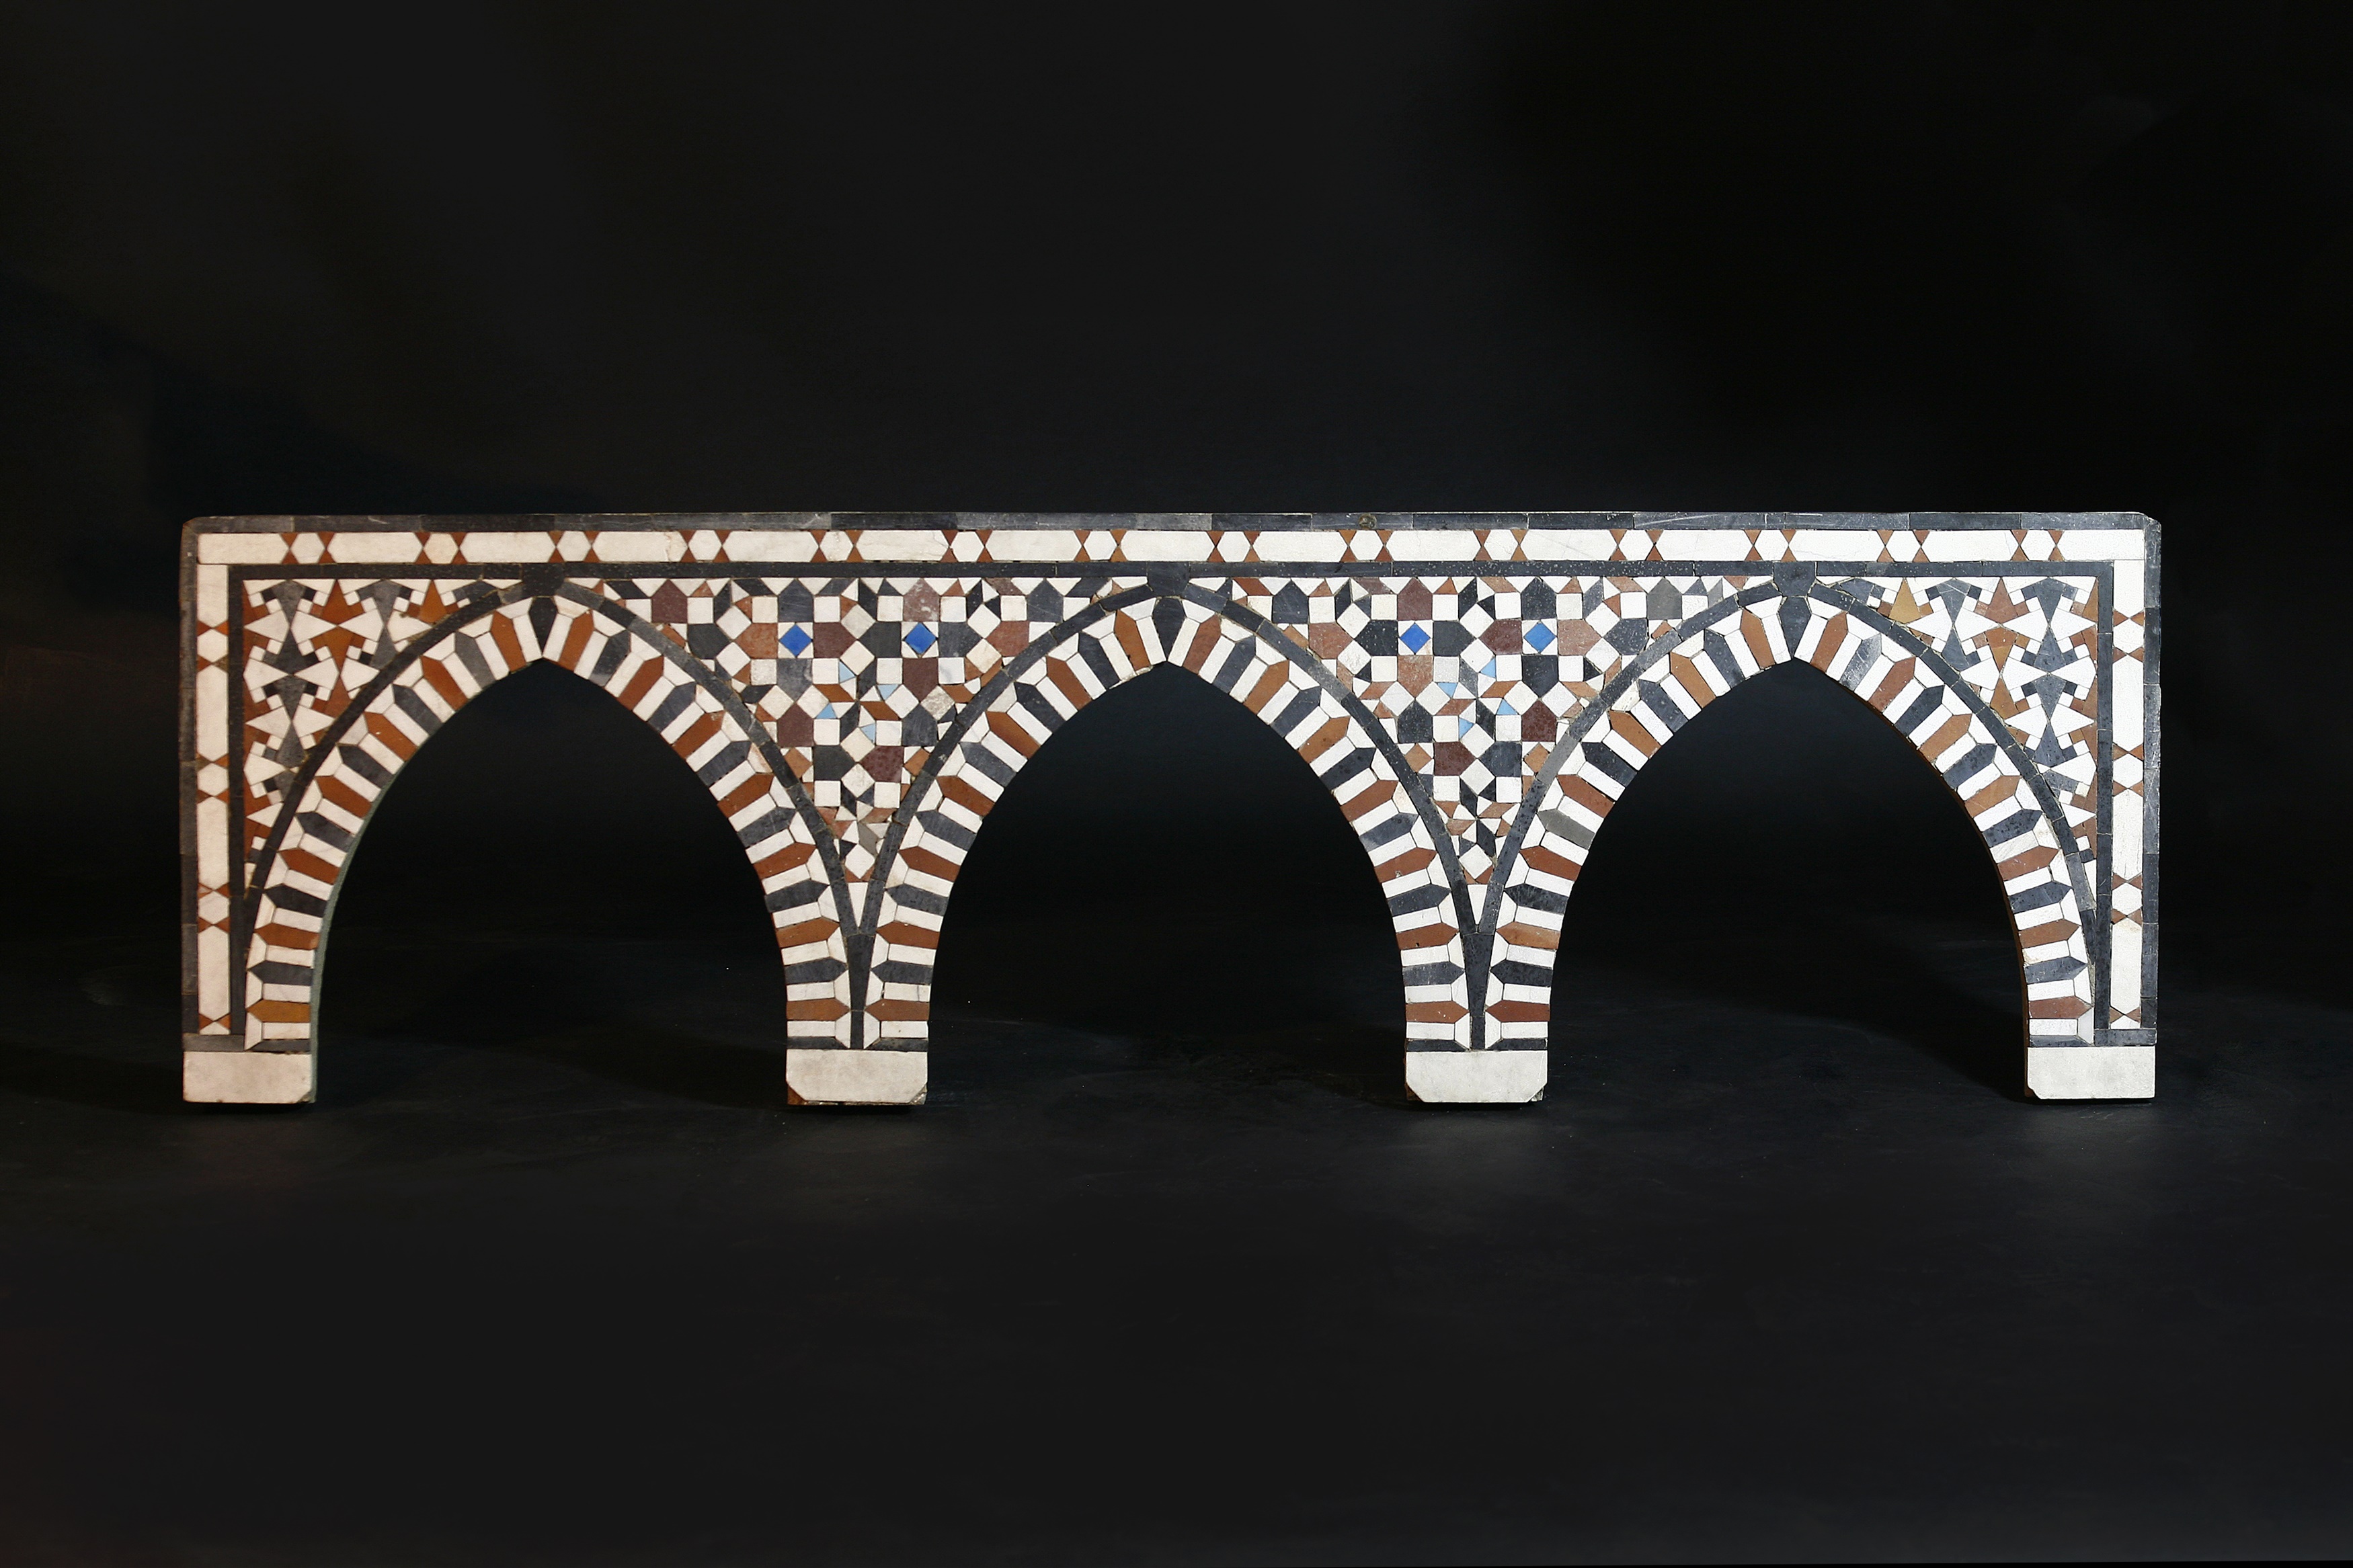 A Mamluk (15th-17th century CE) mosaic triple arched panel